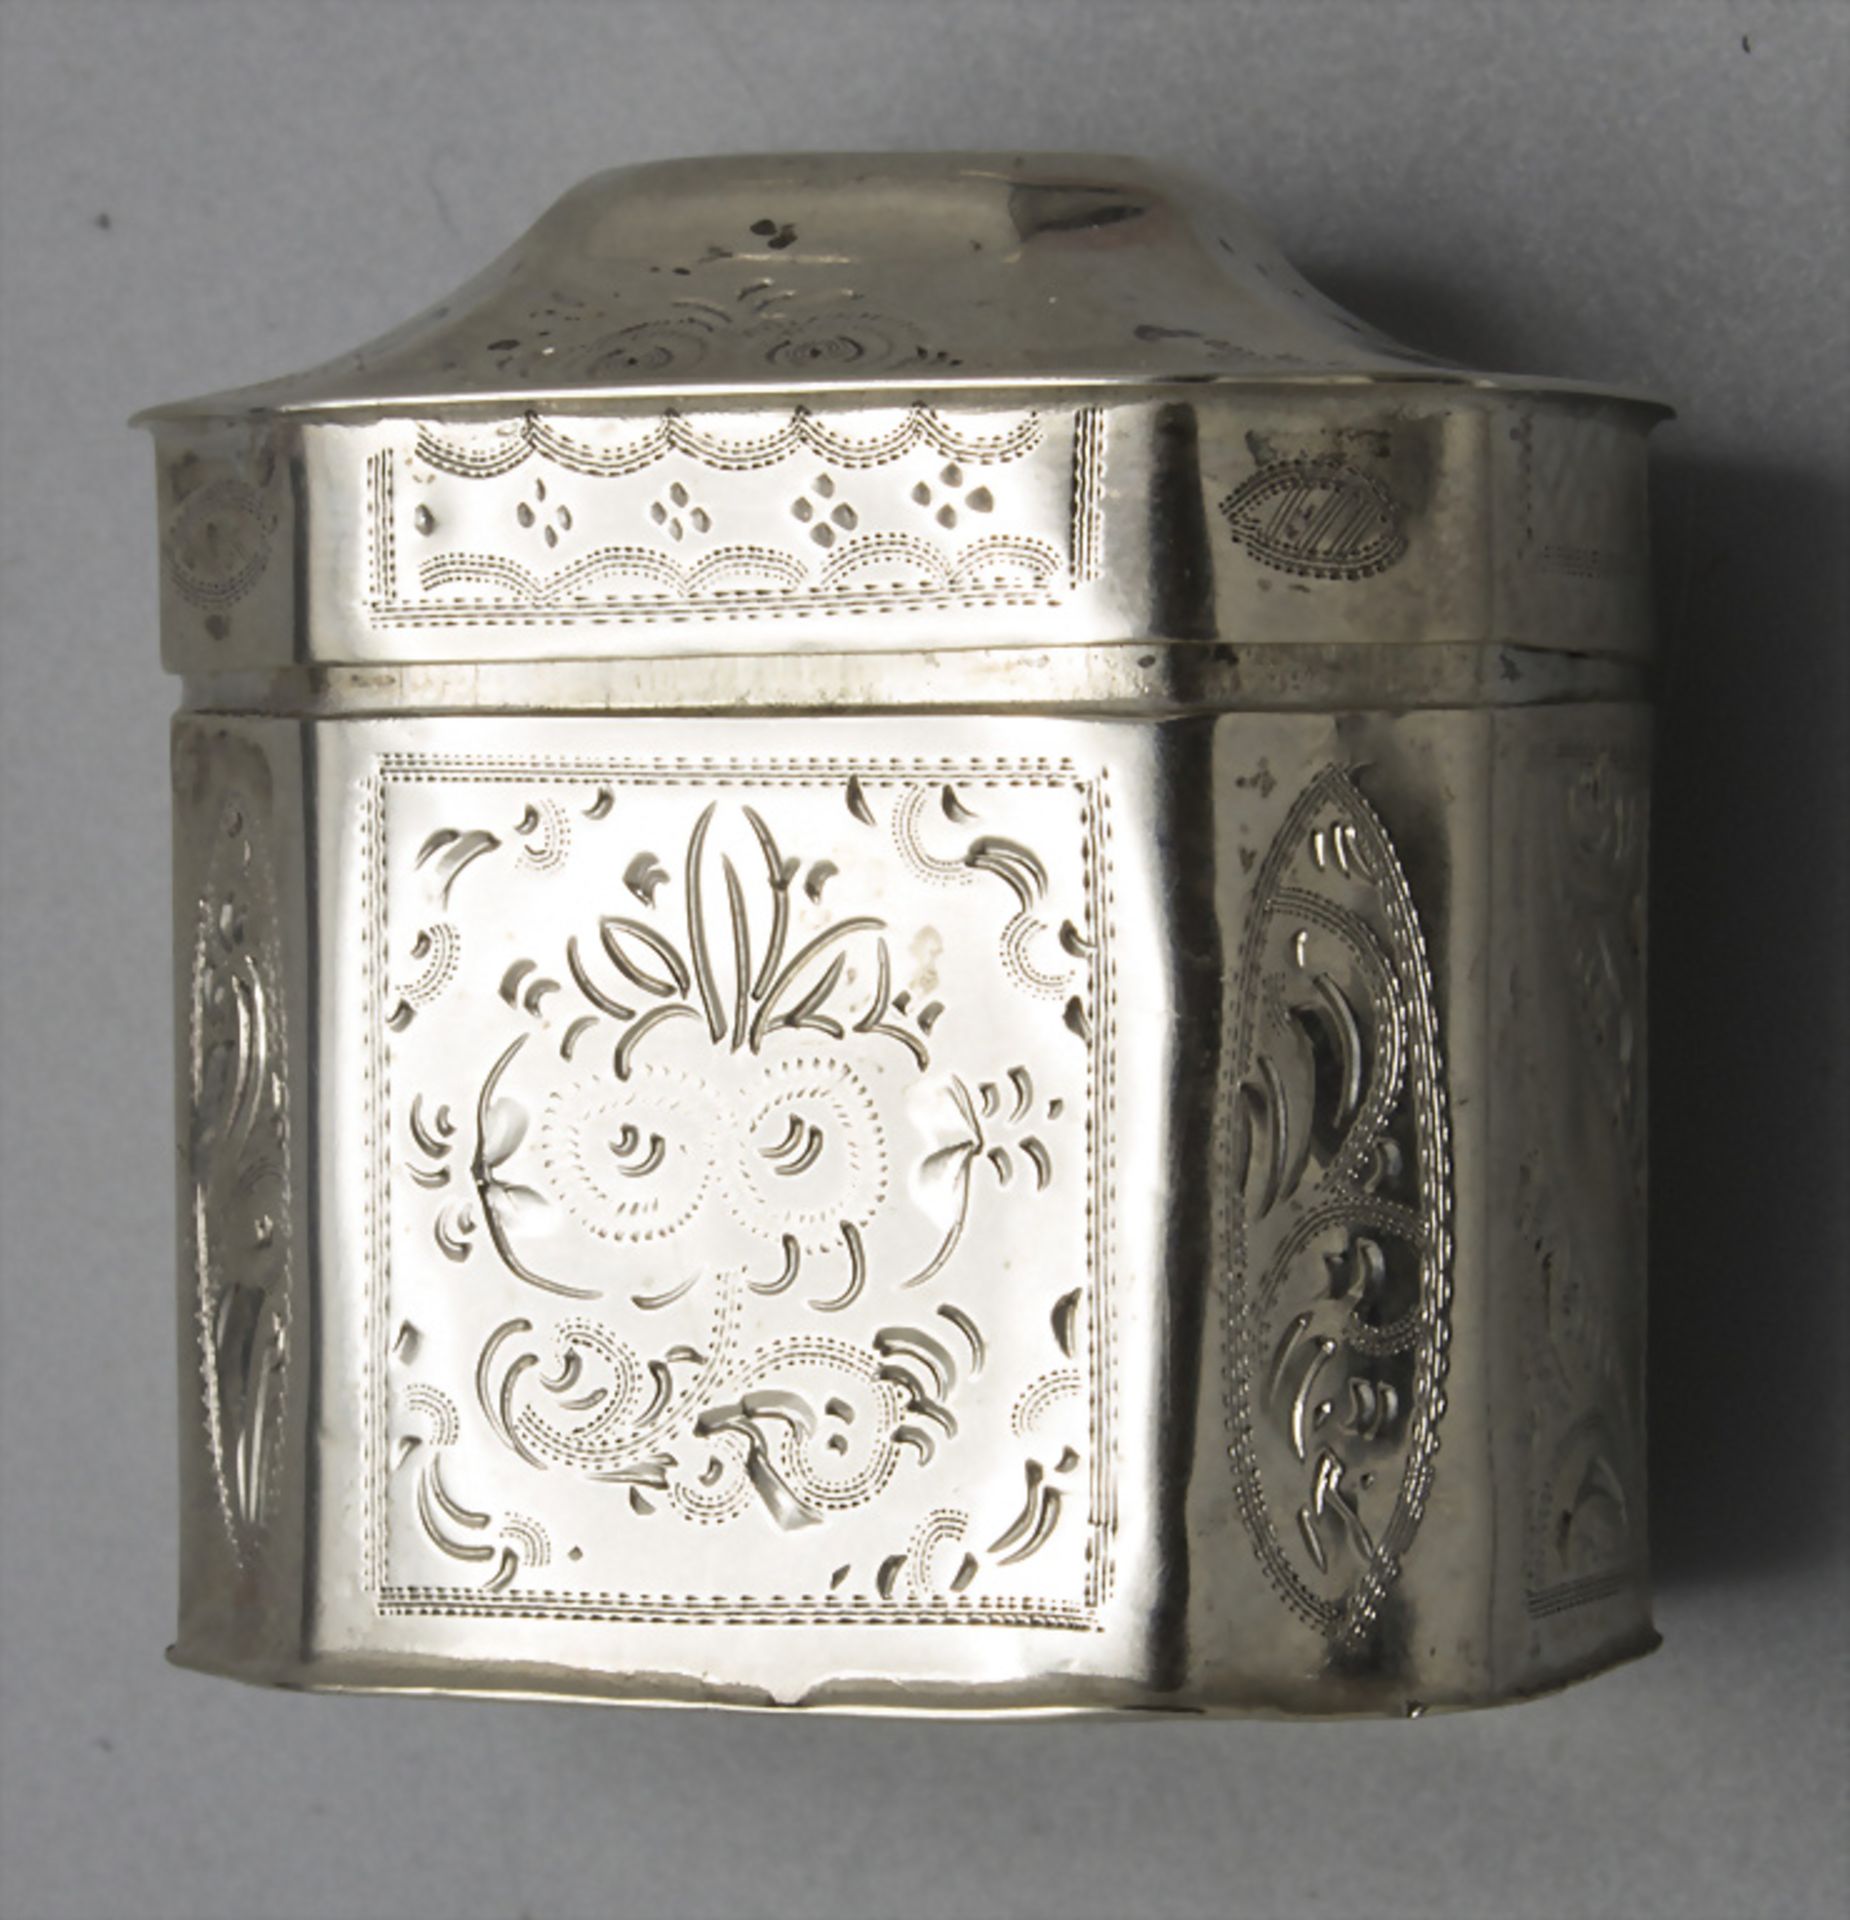 Tabatiere / Schnupftabakdose / A silver snuff box, Niederlande / Nederland, um 1833 - Image 6 of 8